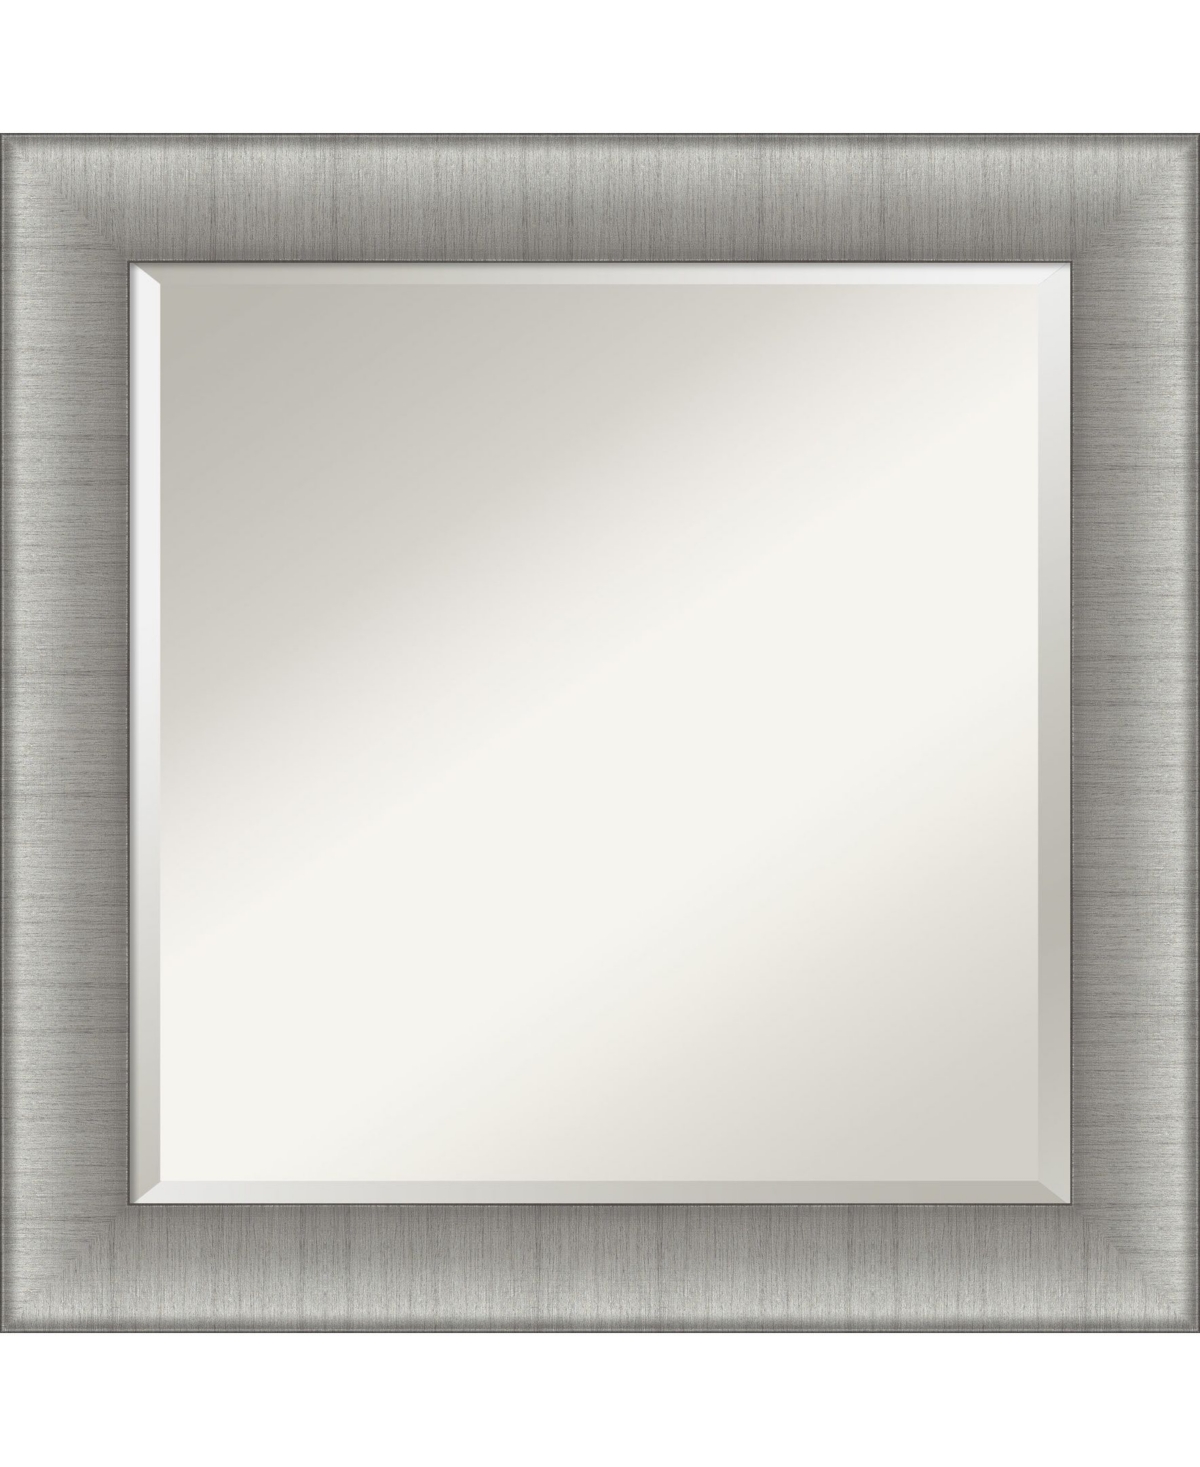 Elegant Brushed Framed Bathroom Vanity Wall Mirror, 24.75" x 24.75" - Silver